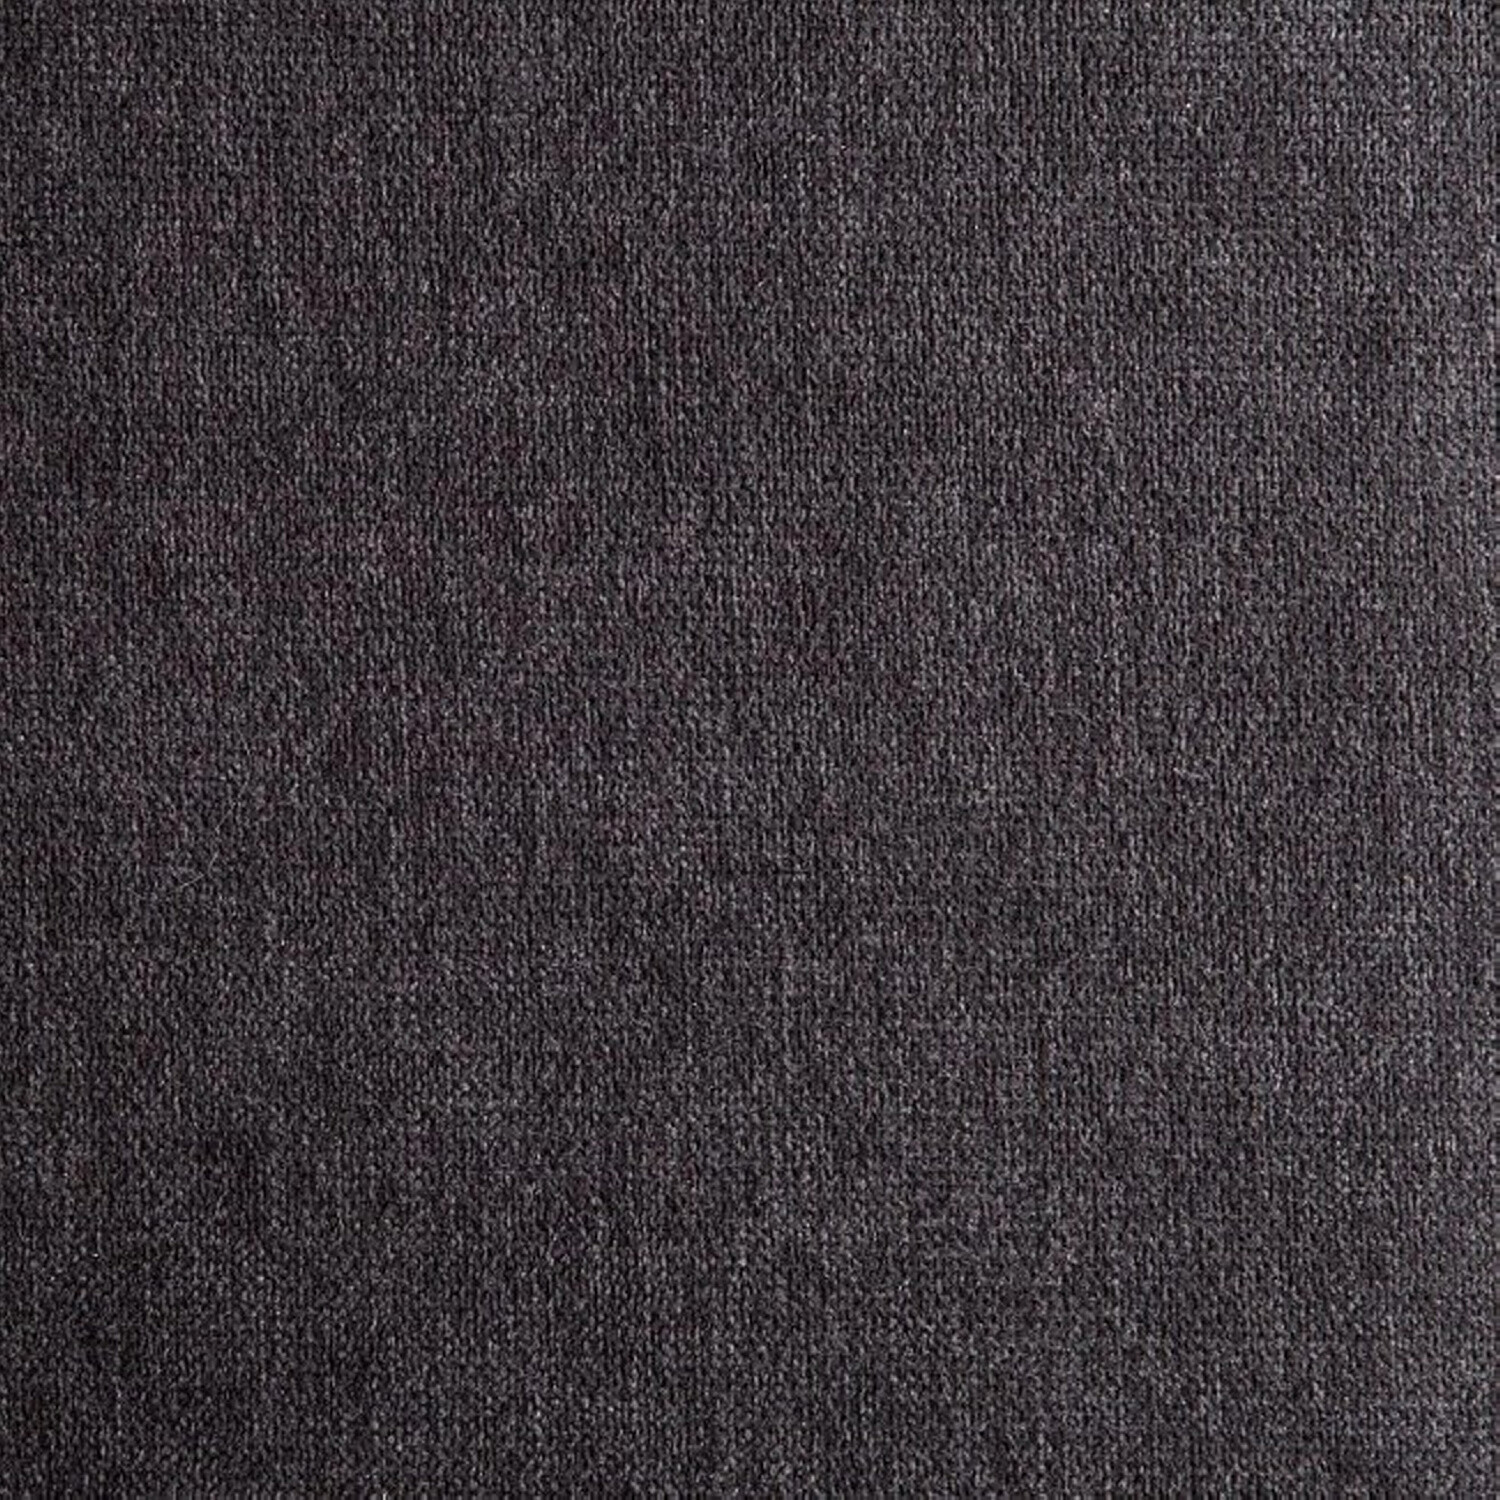 Стул AKSHOME Melon поворотный ткань серый/черный (73215) - Фото 6